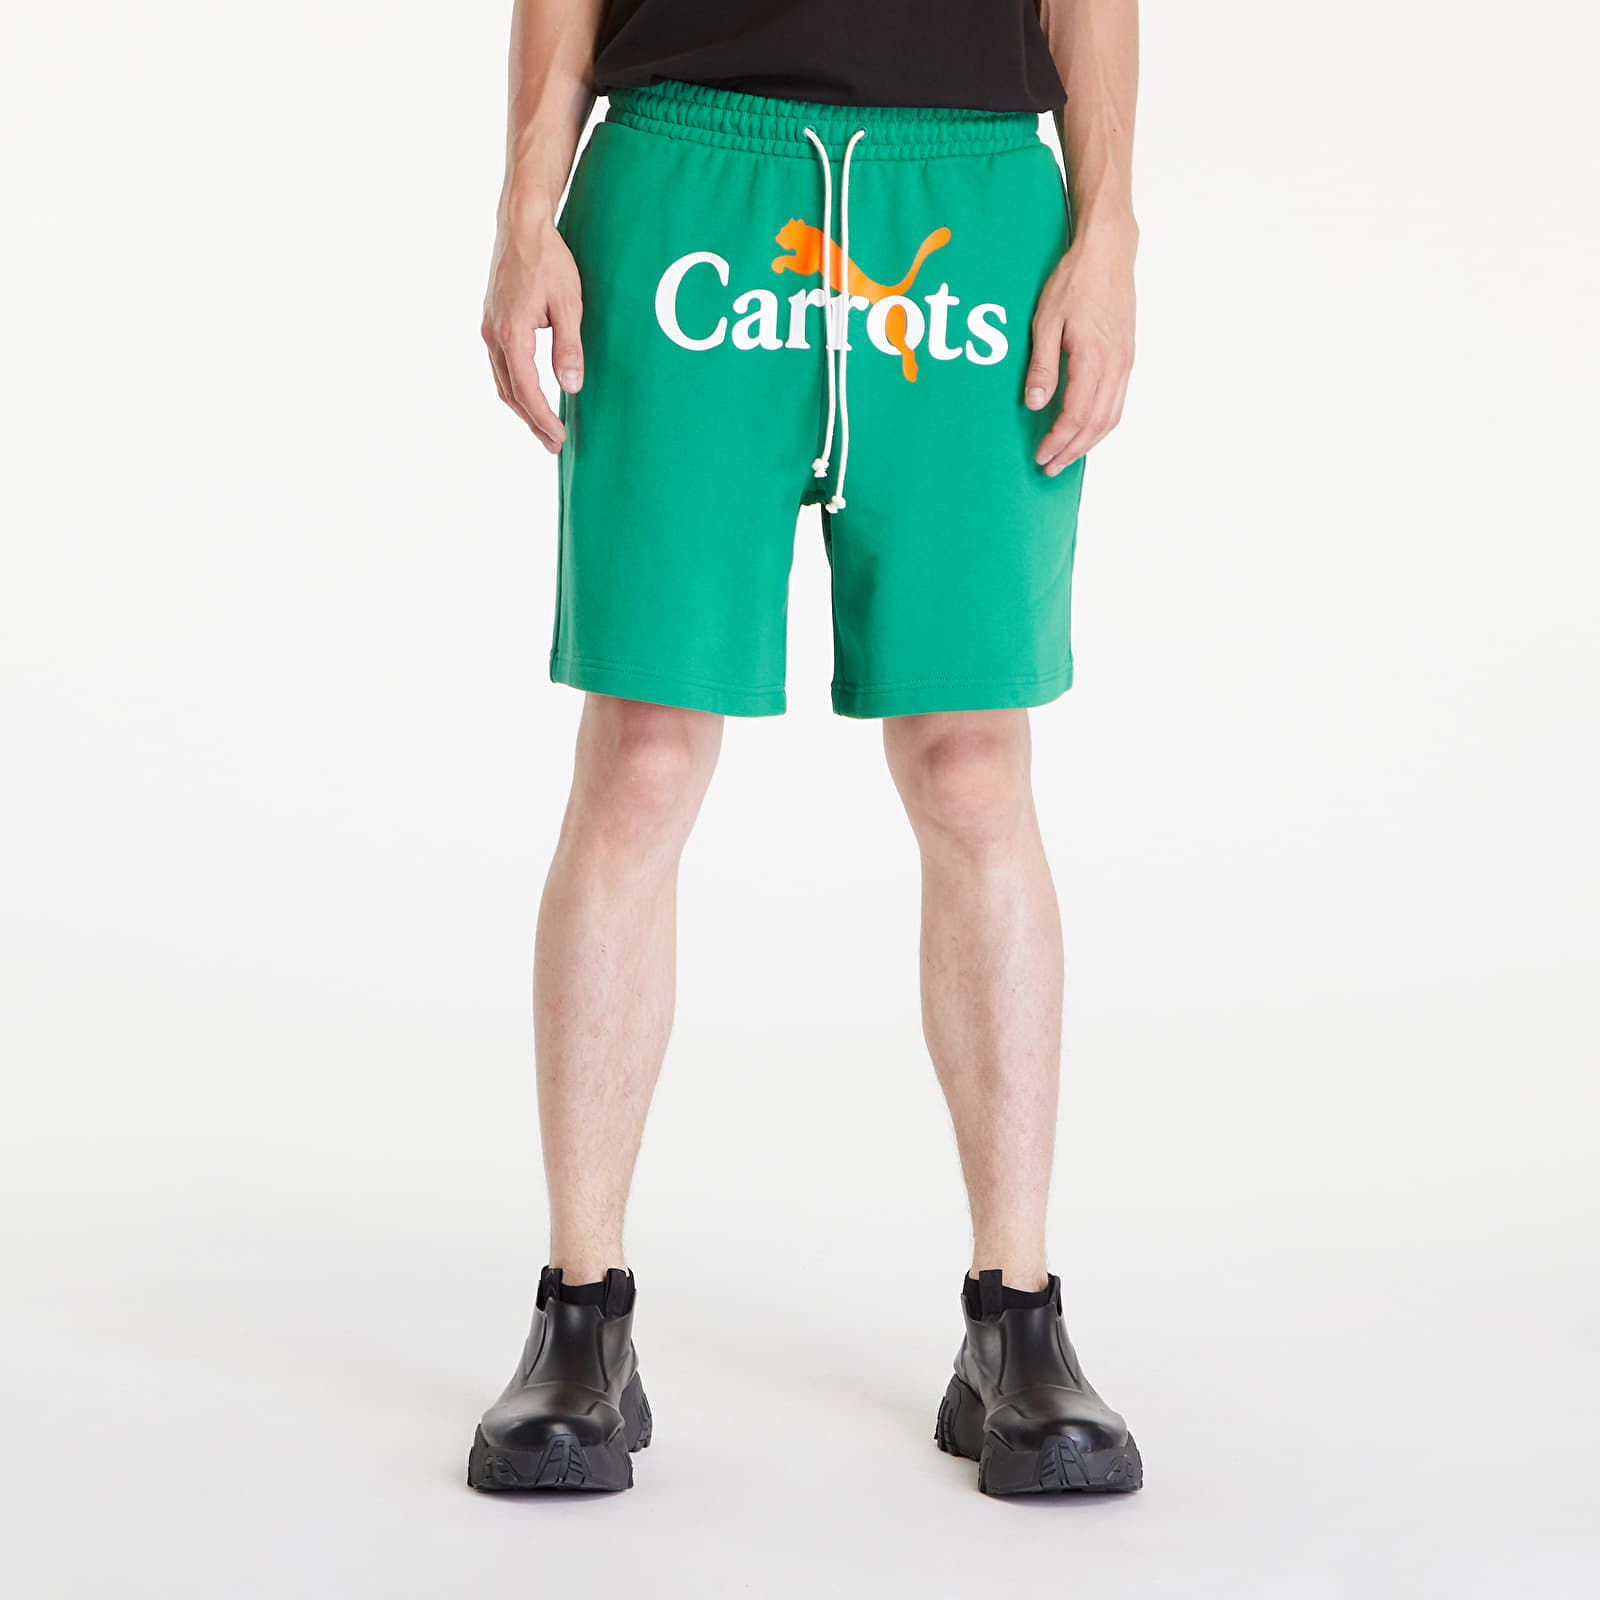 Carrots x Shorts 7" Green